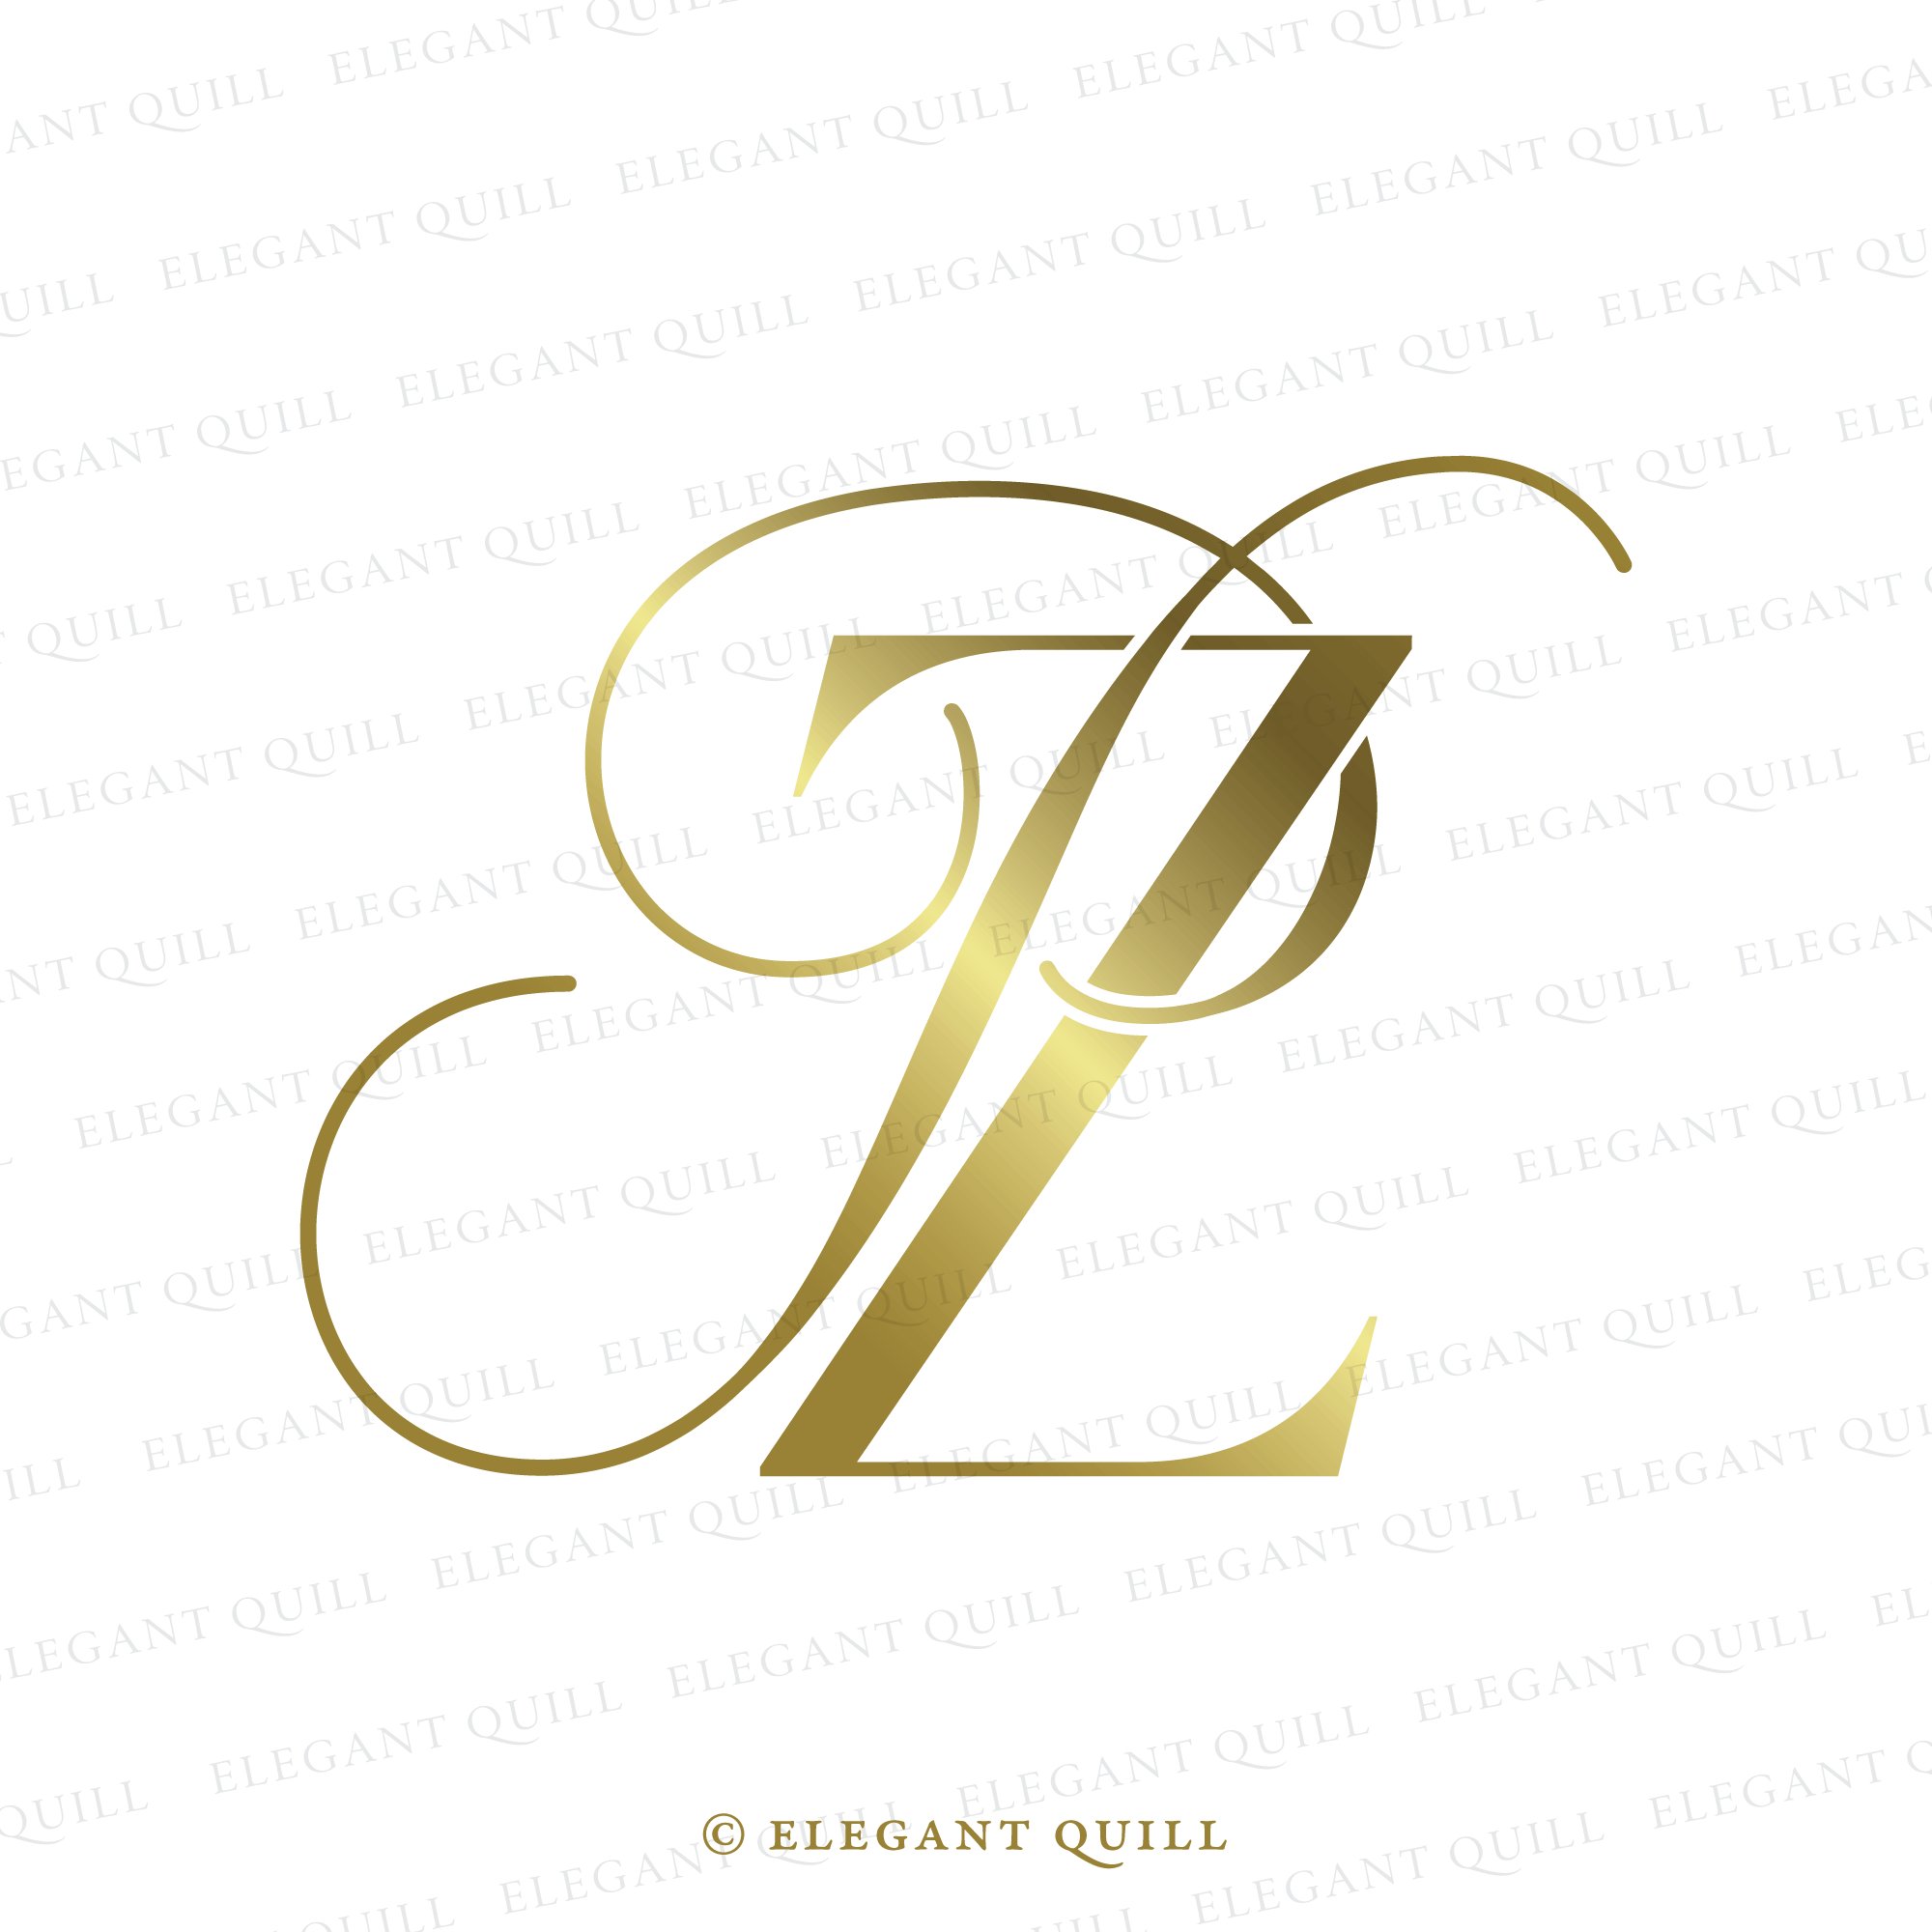 Letter lv wedding monogram logo design Royalty Free Vector